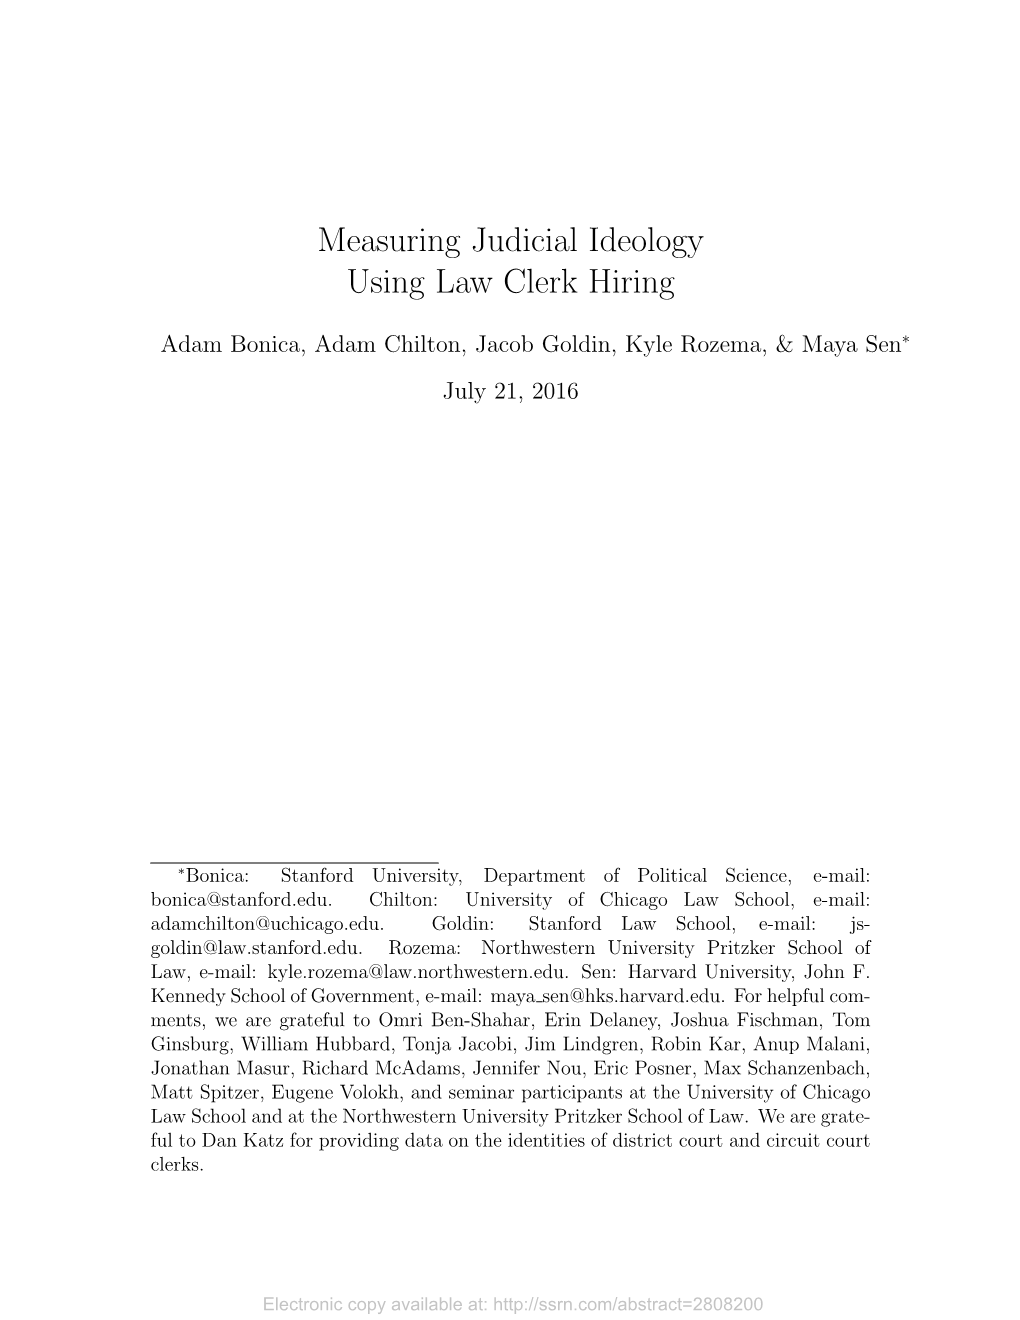 Measuring Judicial Ideology Using Law Clerk Hiring